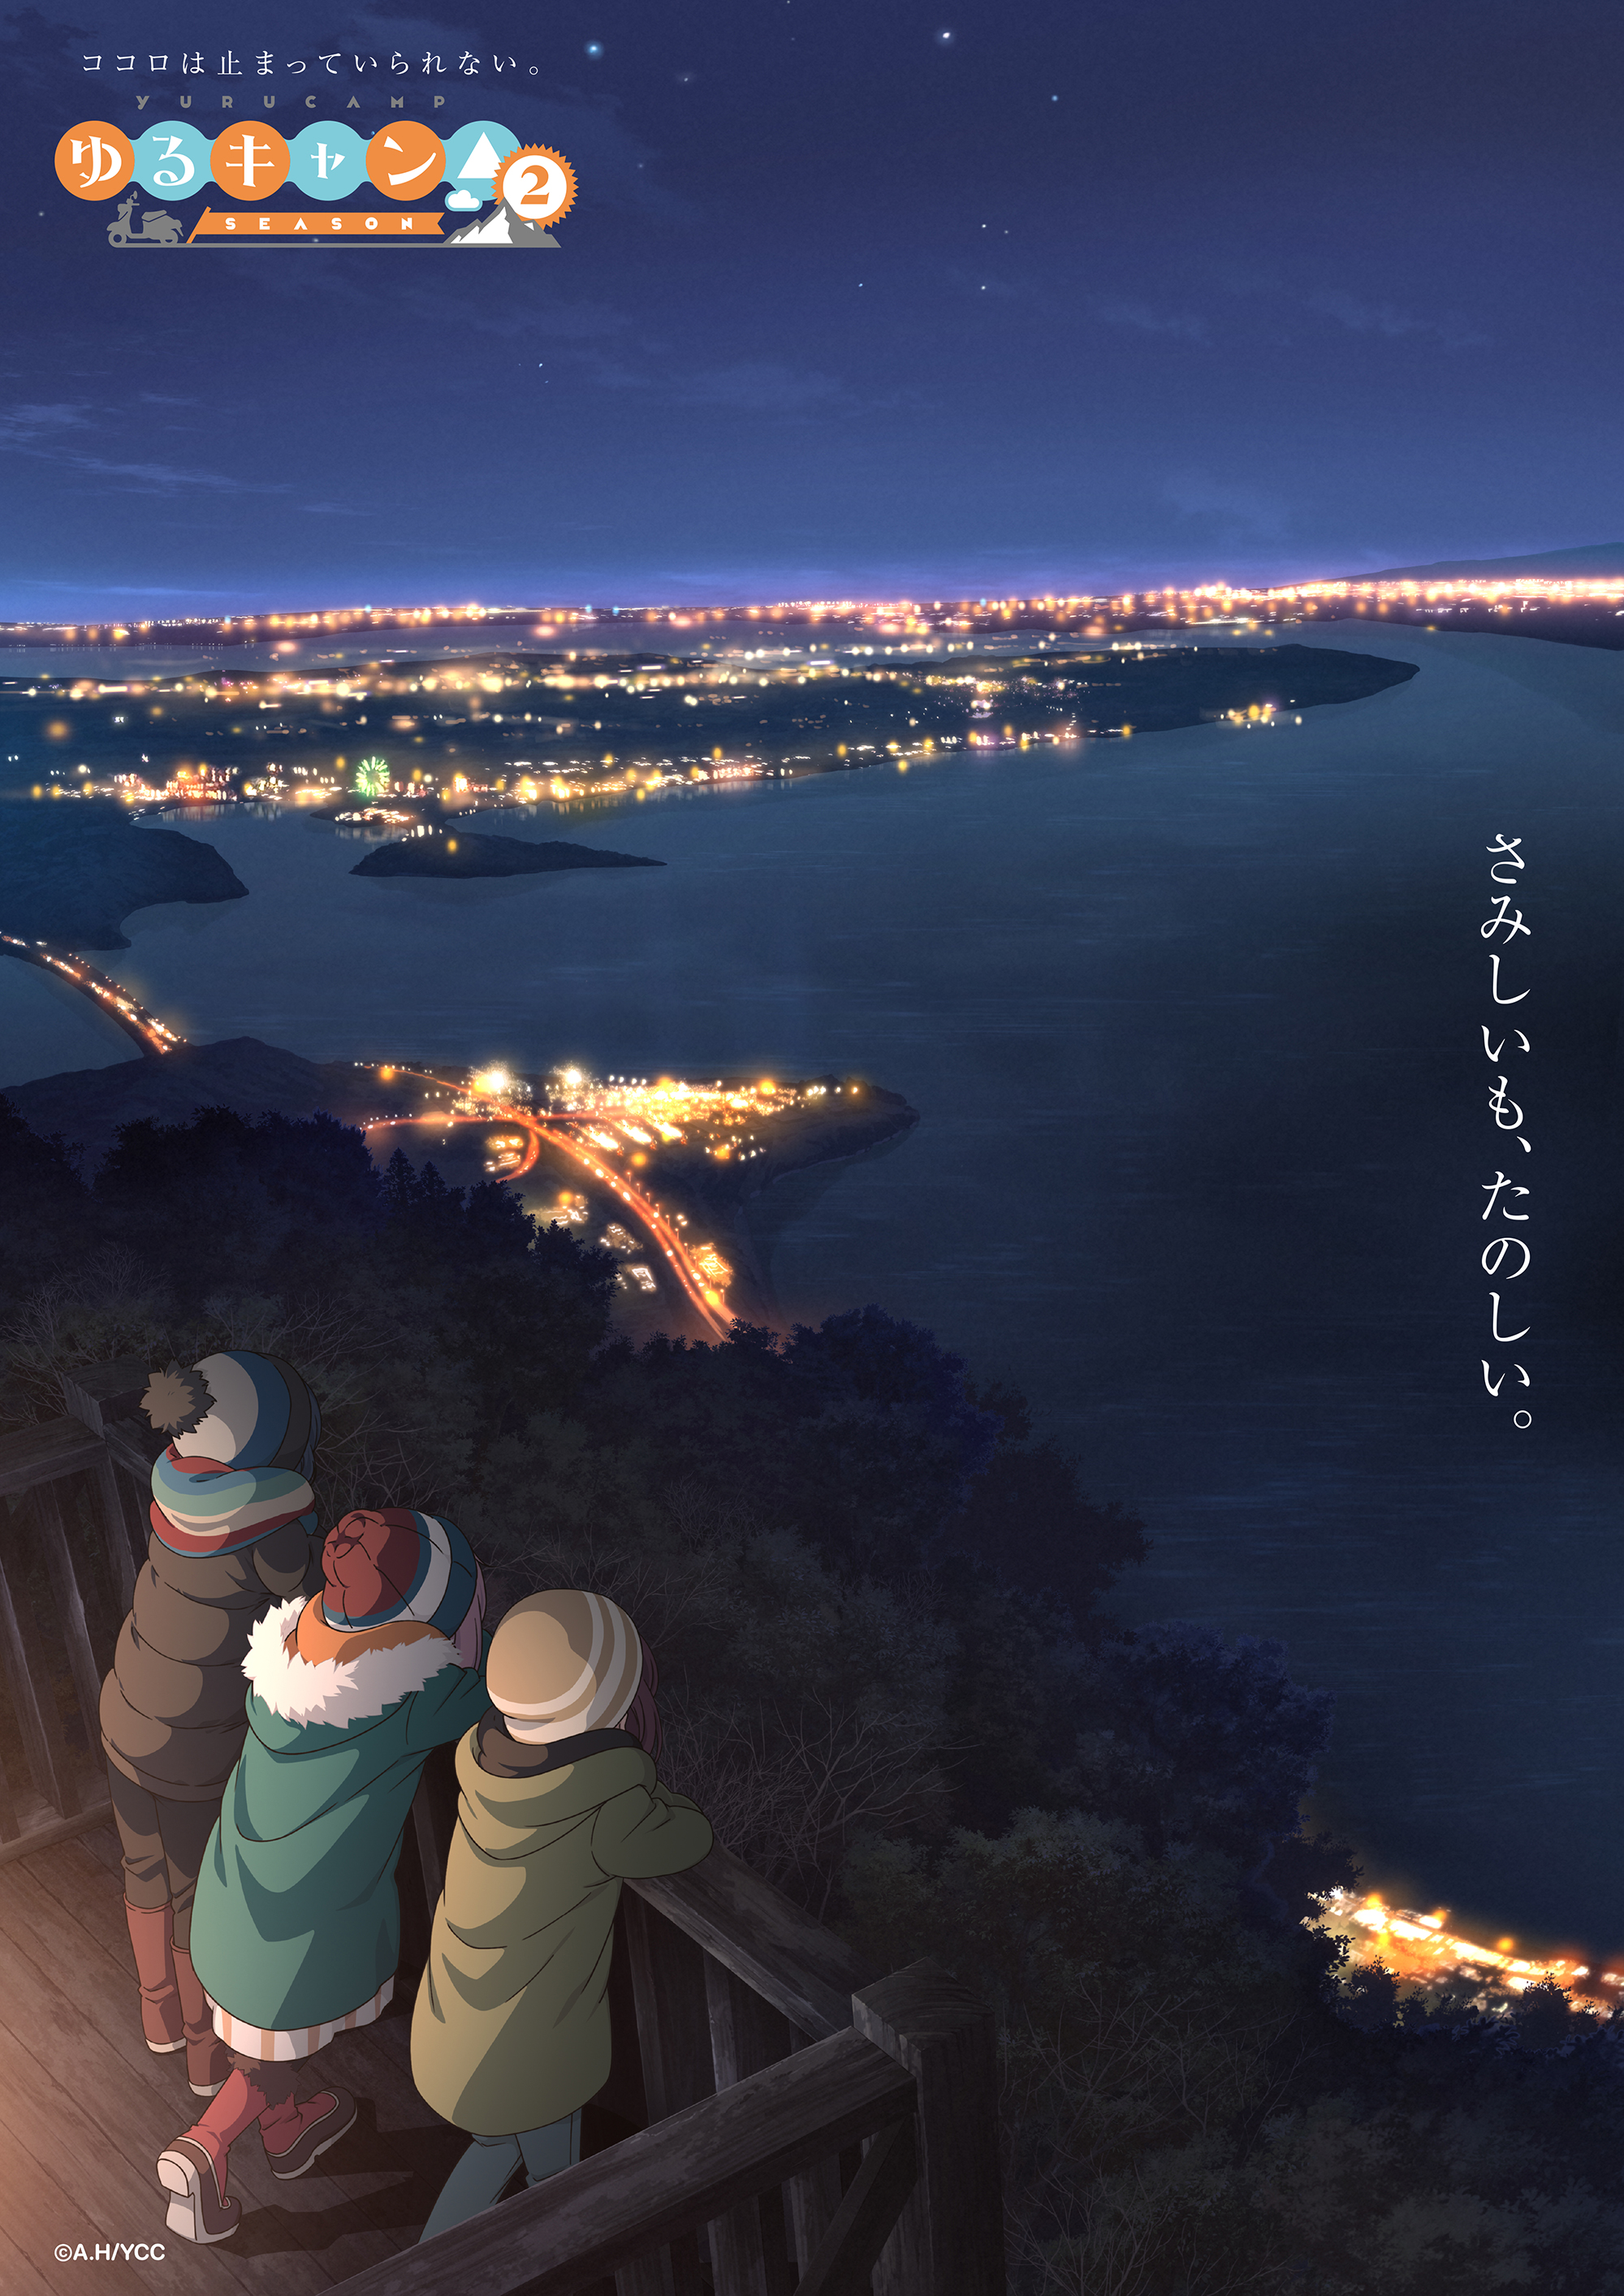 Anime 2000x2828 Yuru Camp anime girls anime sky city lights balcony outdoors water